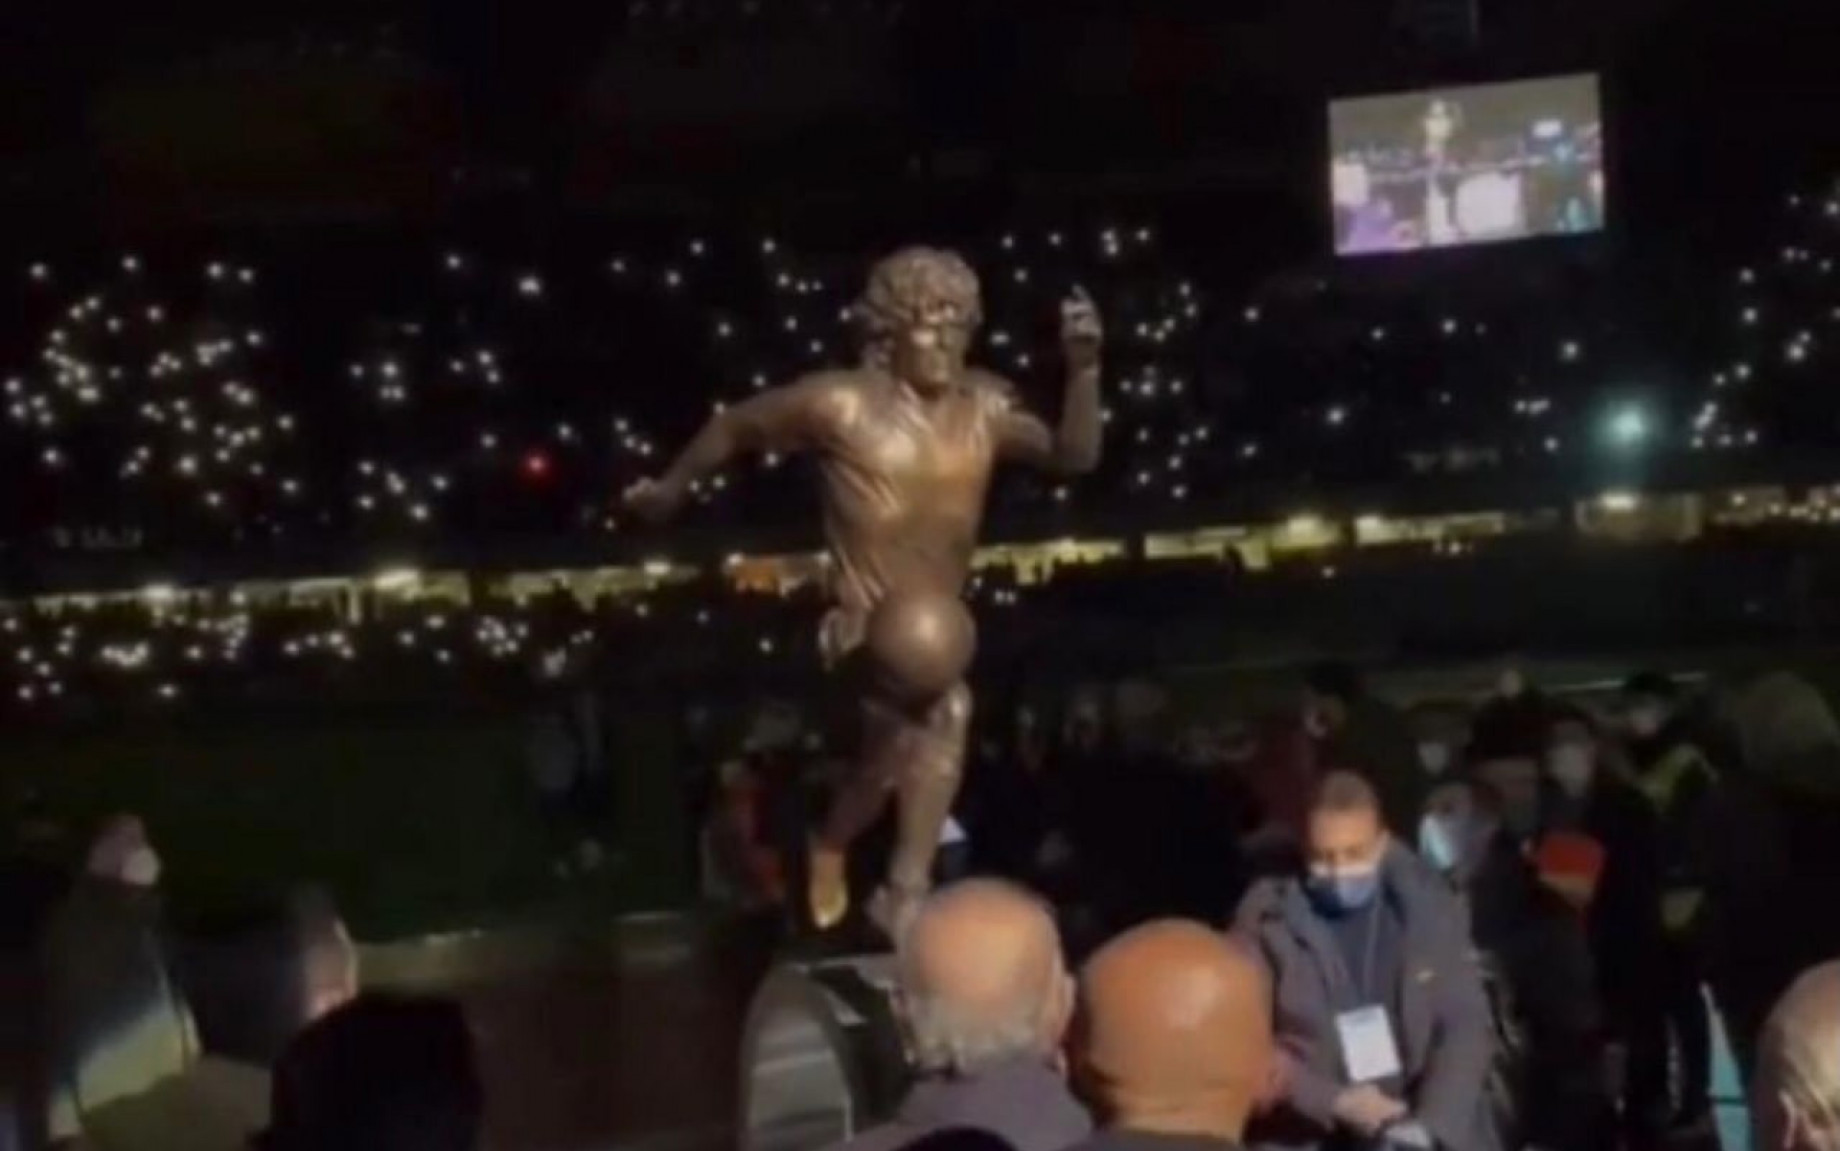 maradona-statua-screen-interno-stadio-gpo.jpg